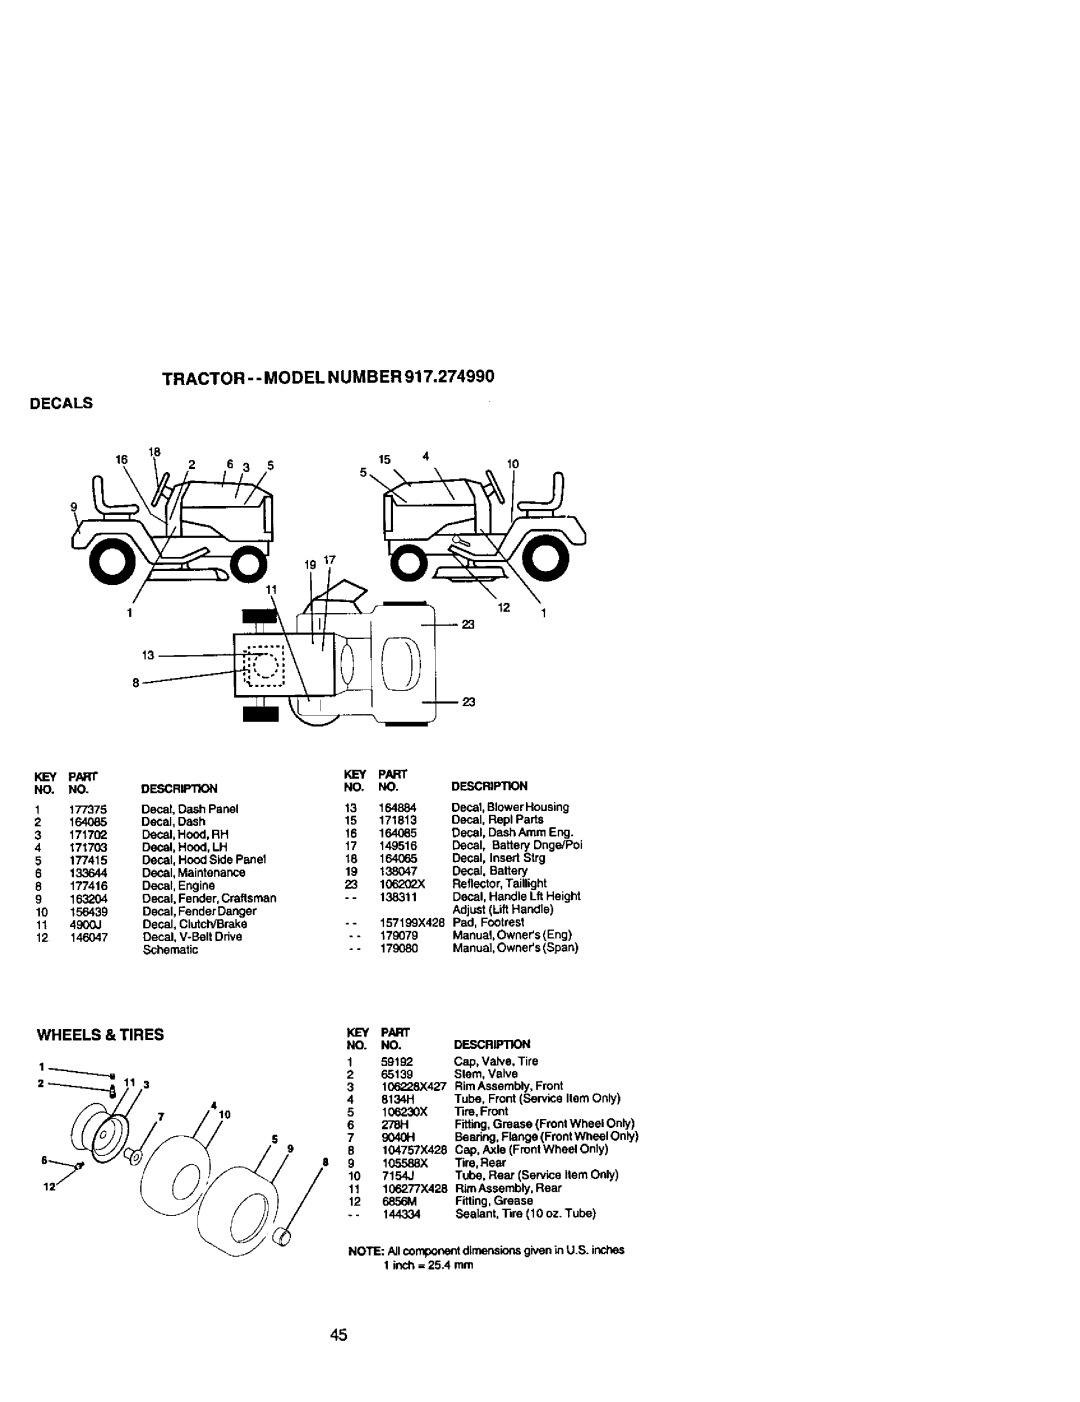 Craftsman 917.27499 manual Tractor--Model Number, Decals, Wheels & Tires 